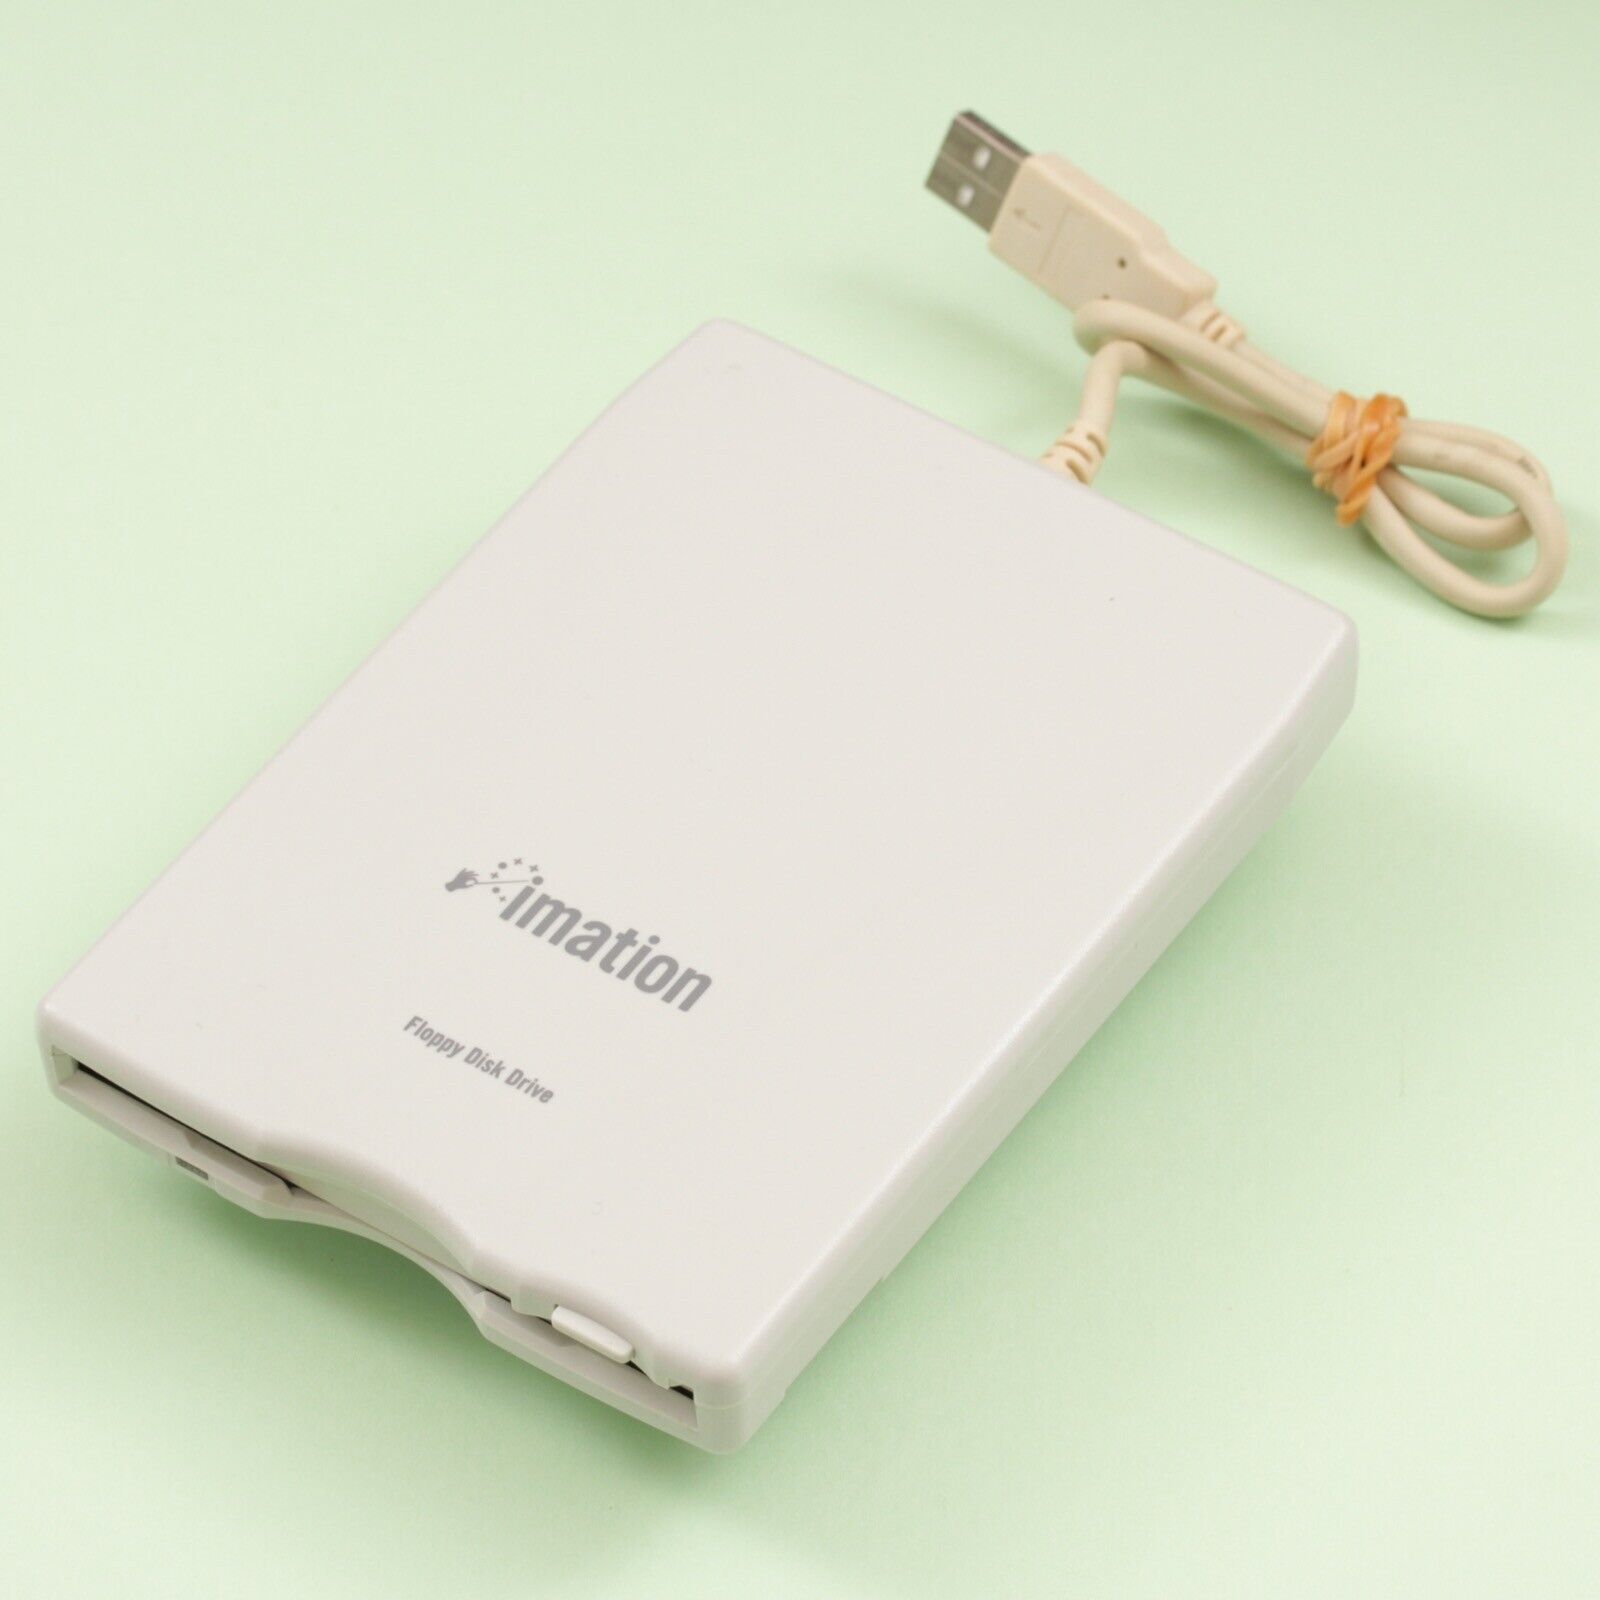 Imation Portable External USB 1.44 MB 3.5” FDD Floppy Disk Drive D353FUE